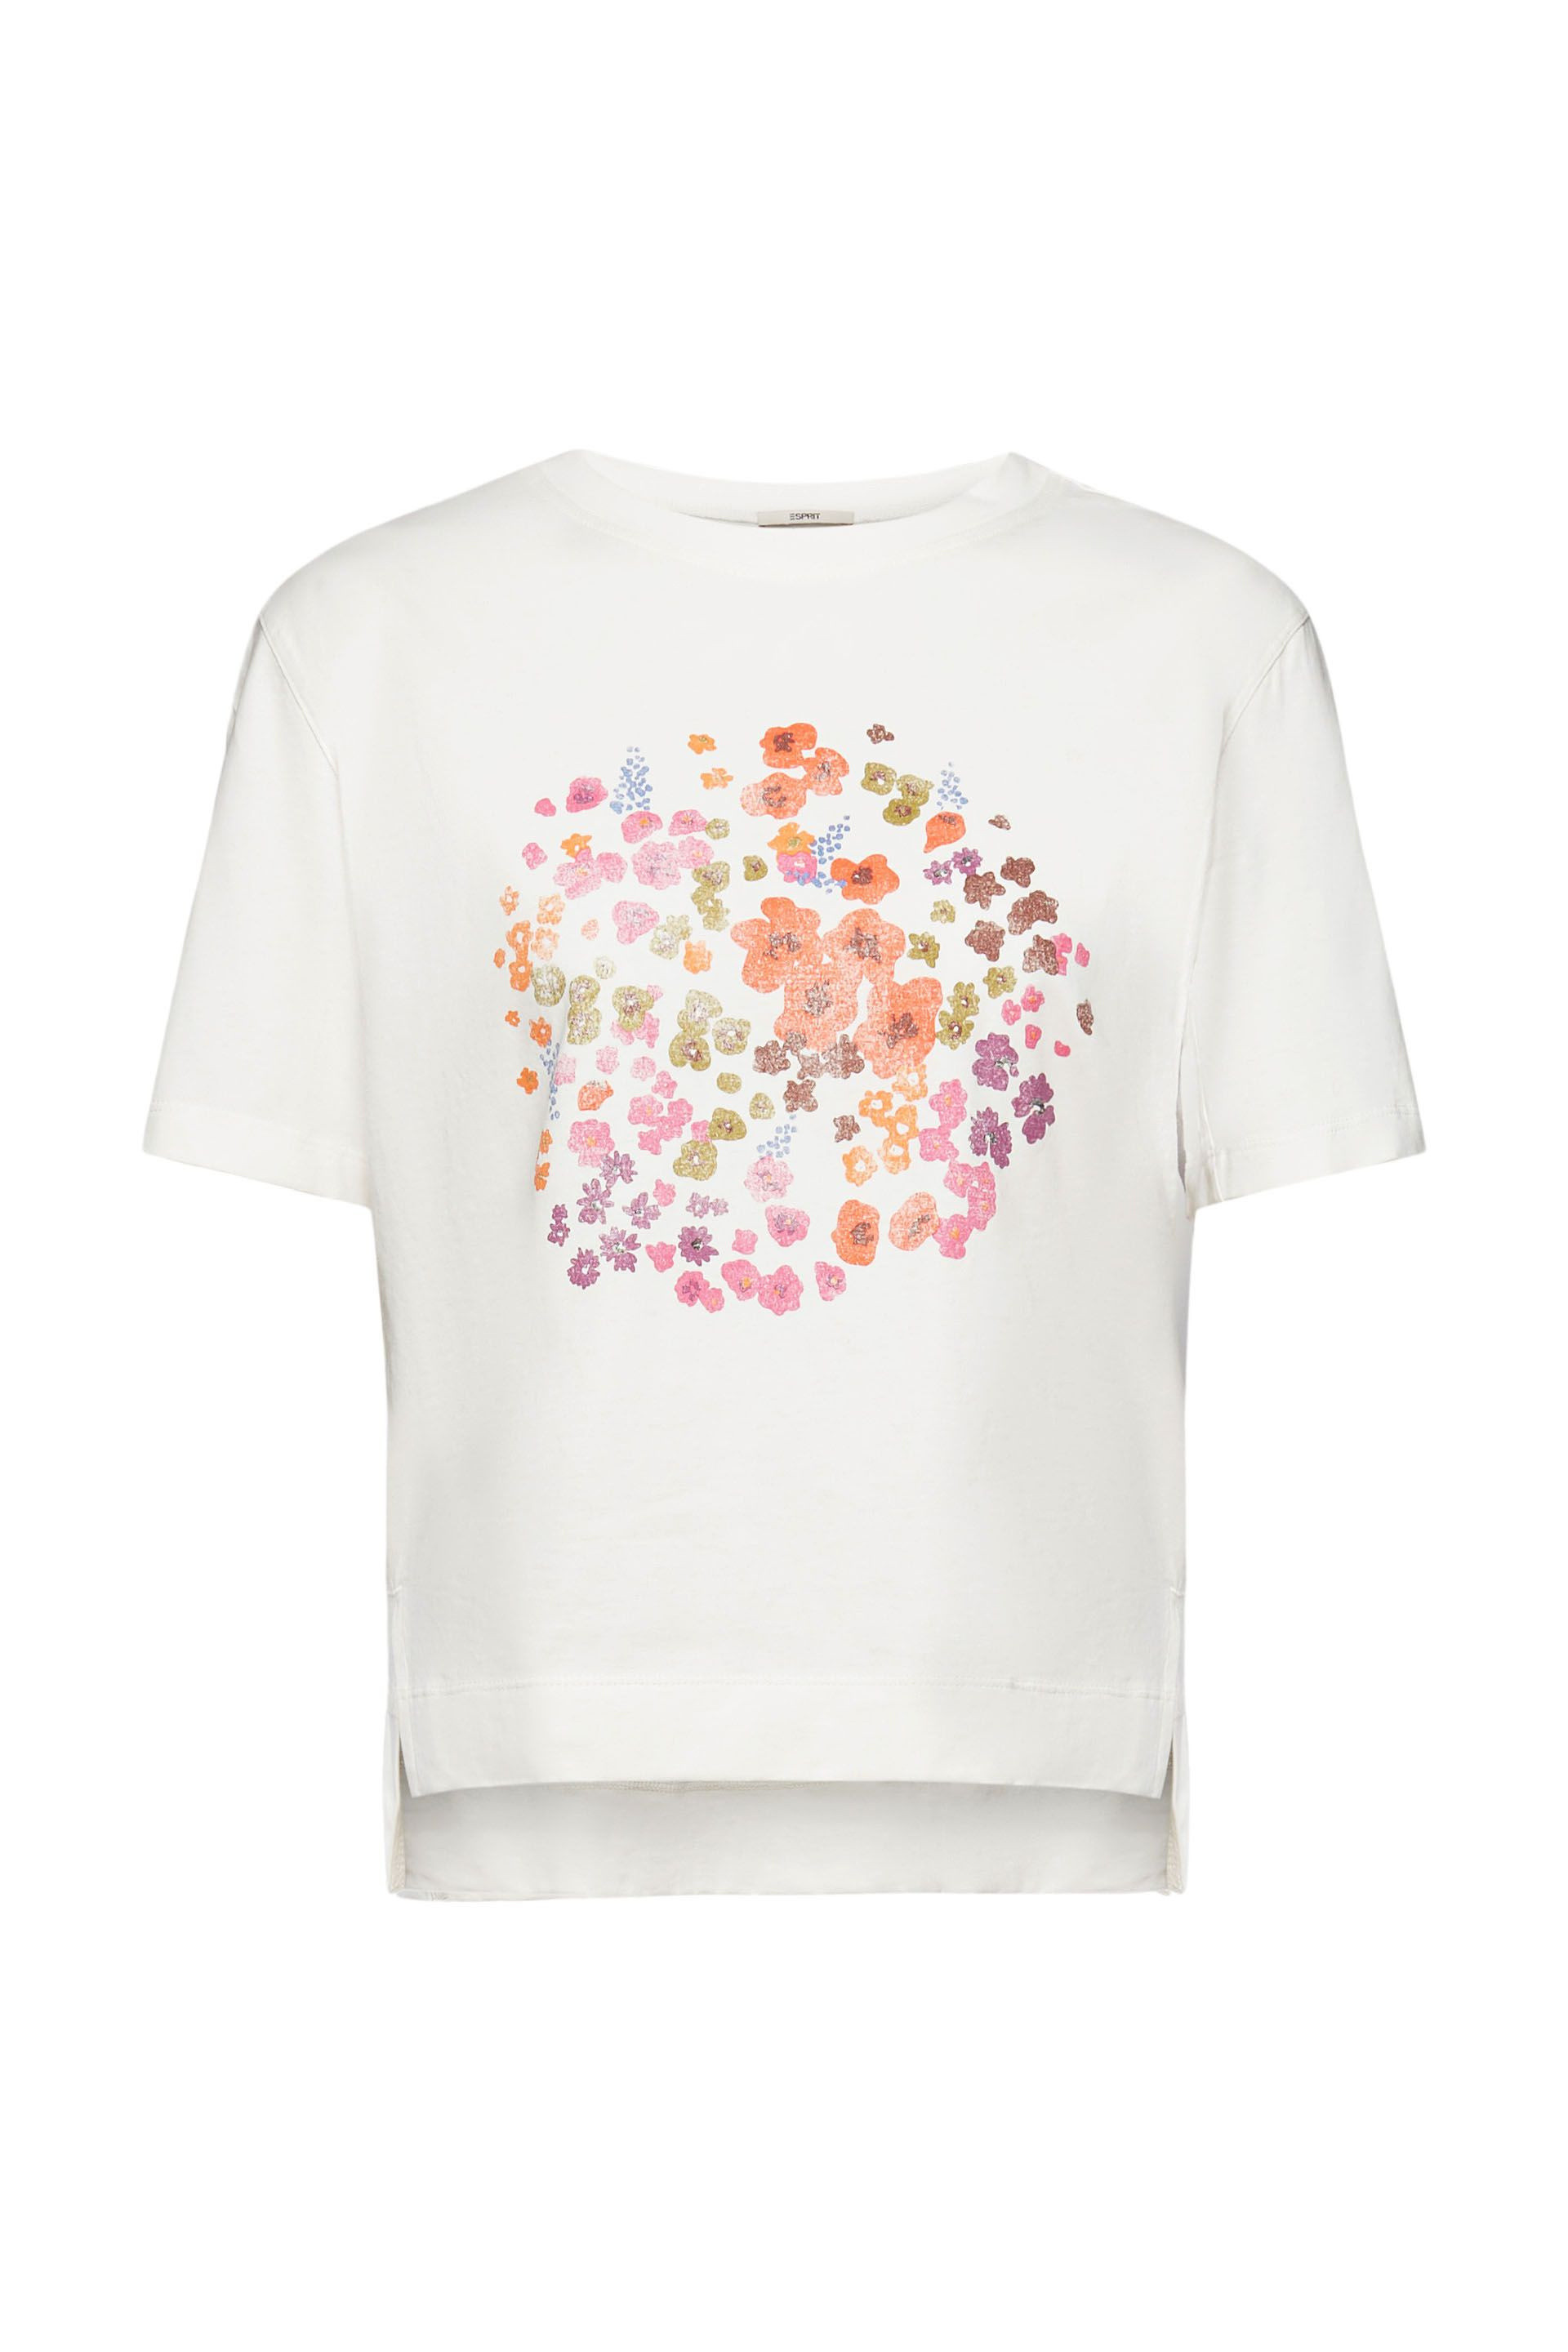 Esprit - T-shirt con stampa floreale, Bianco, large image number 0